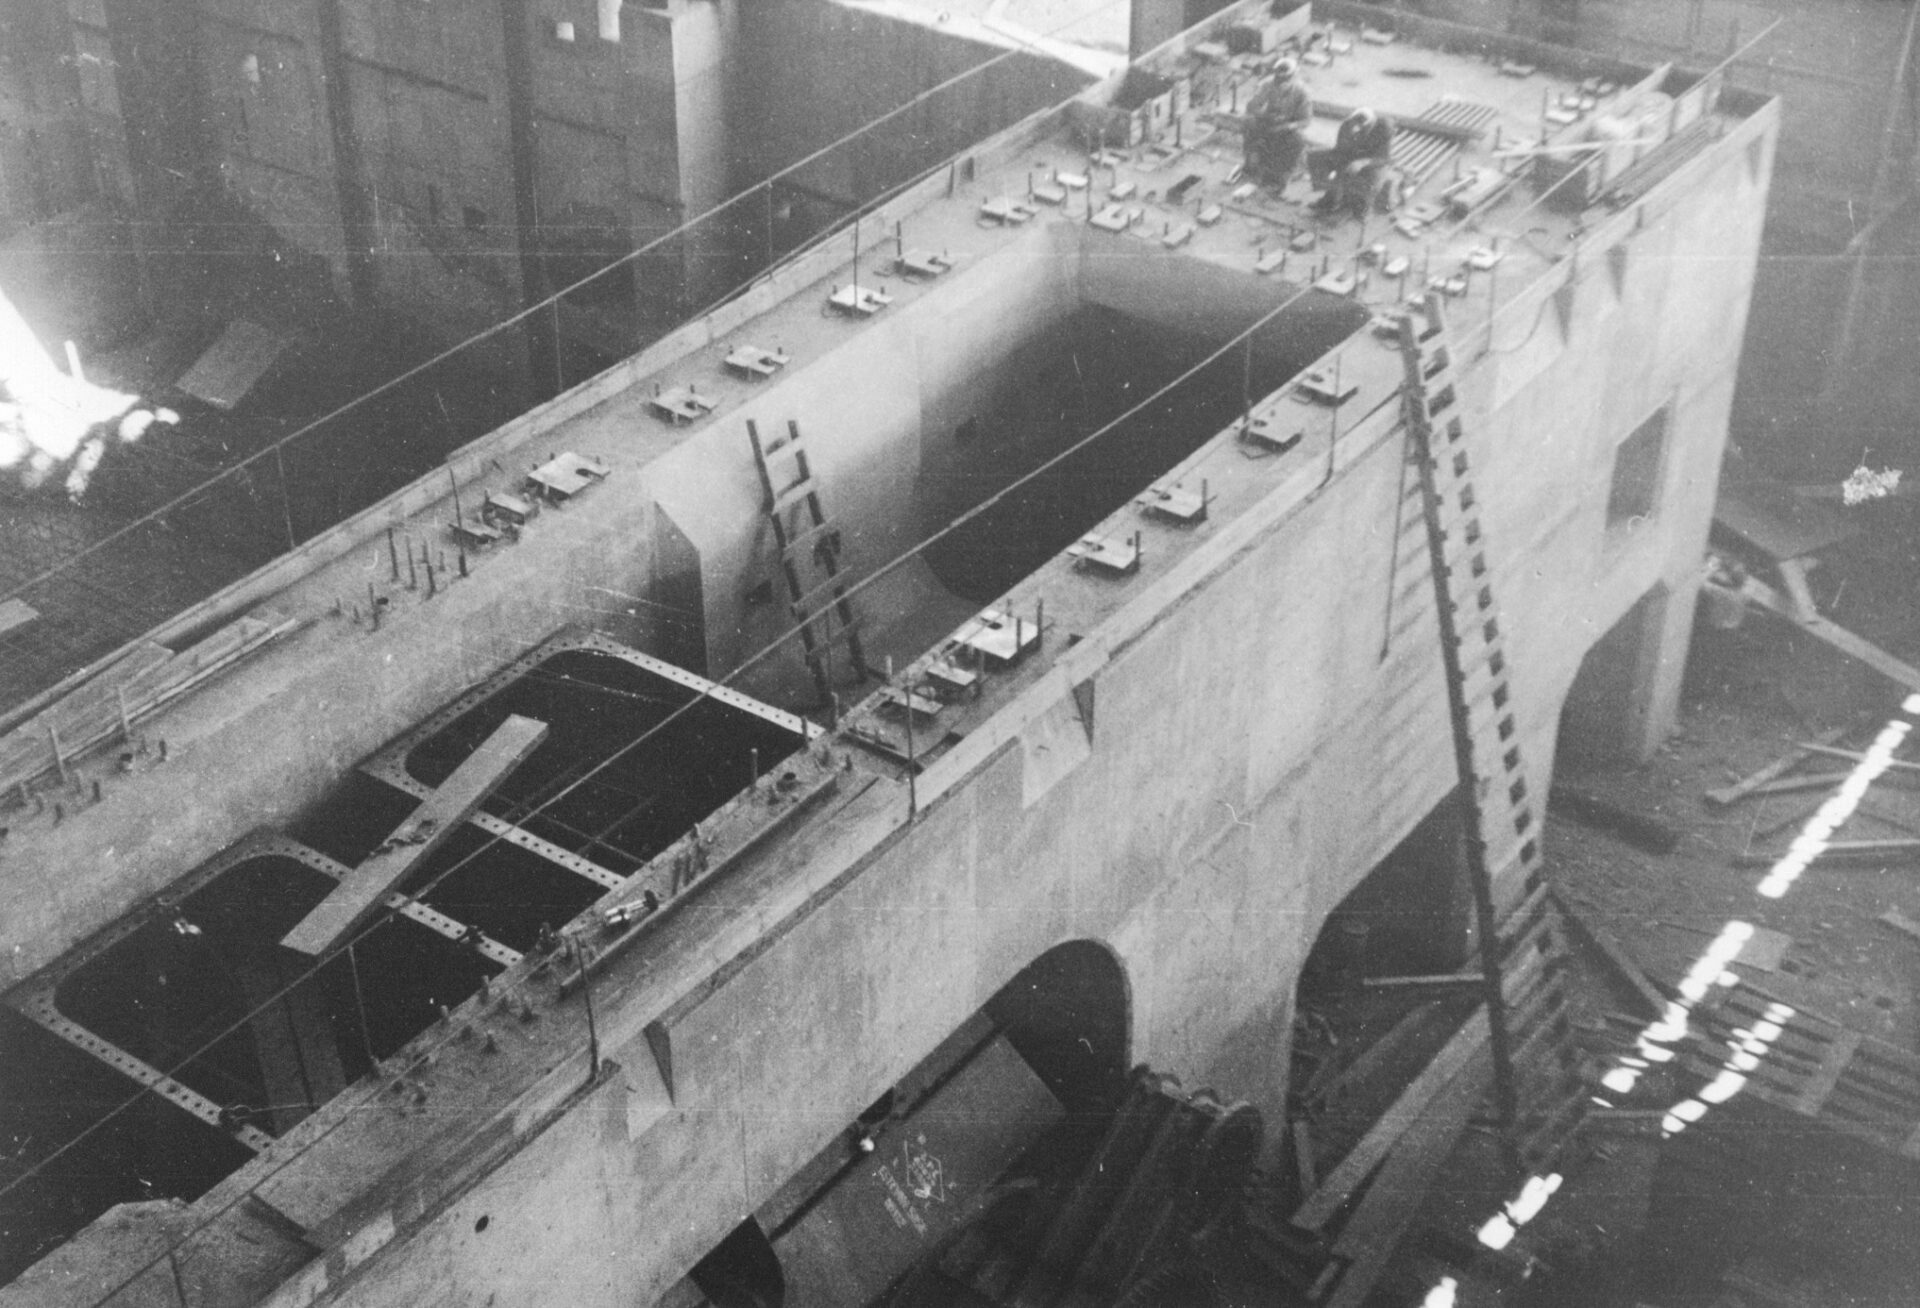 Boundary dam generating station - 1950s